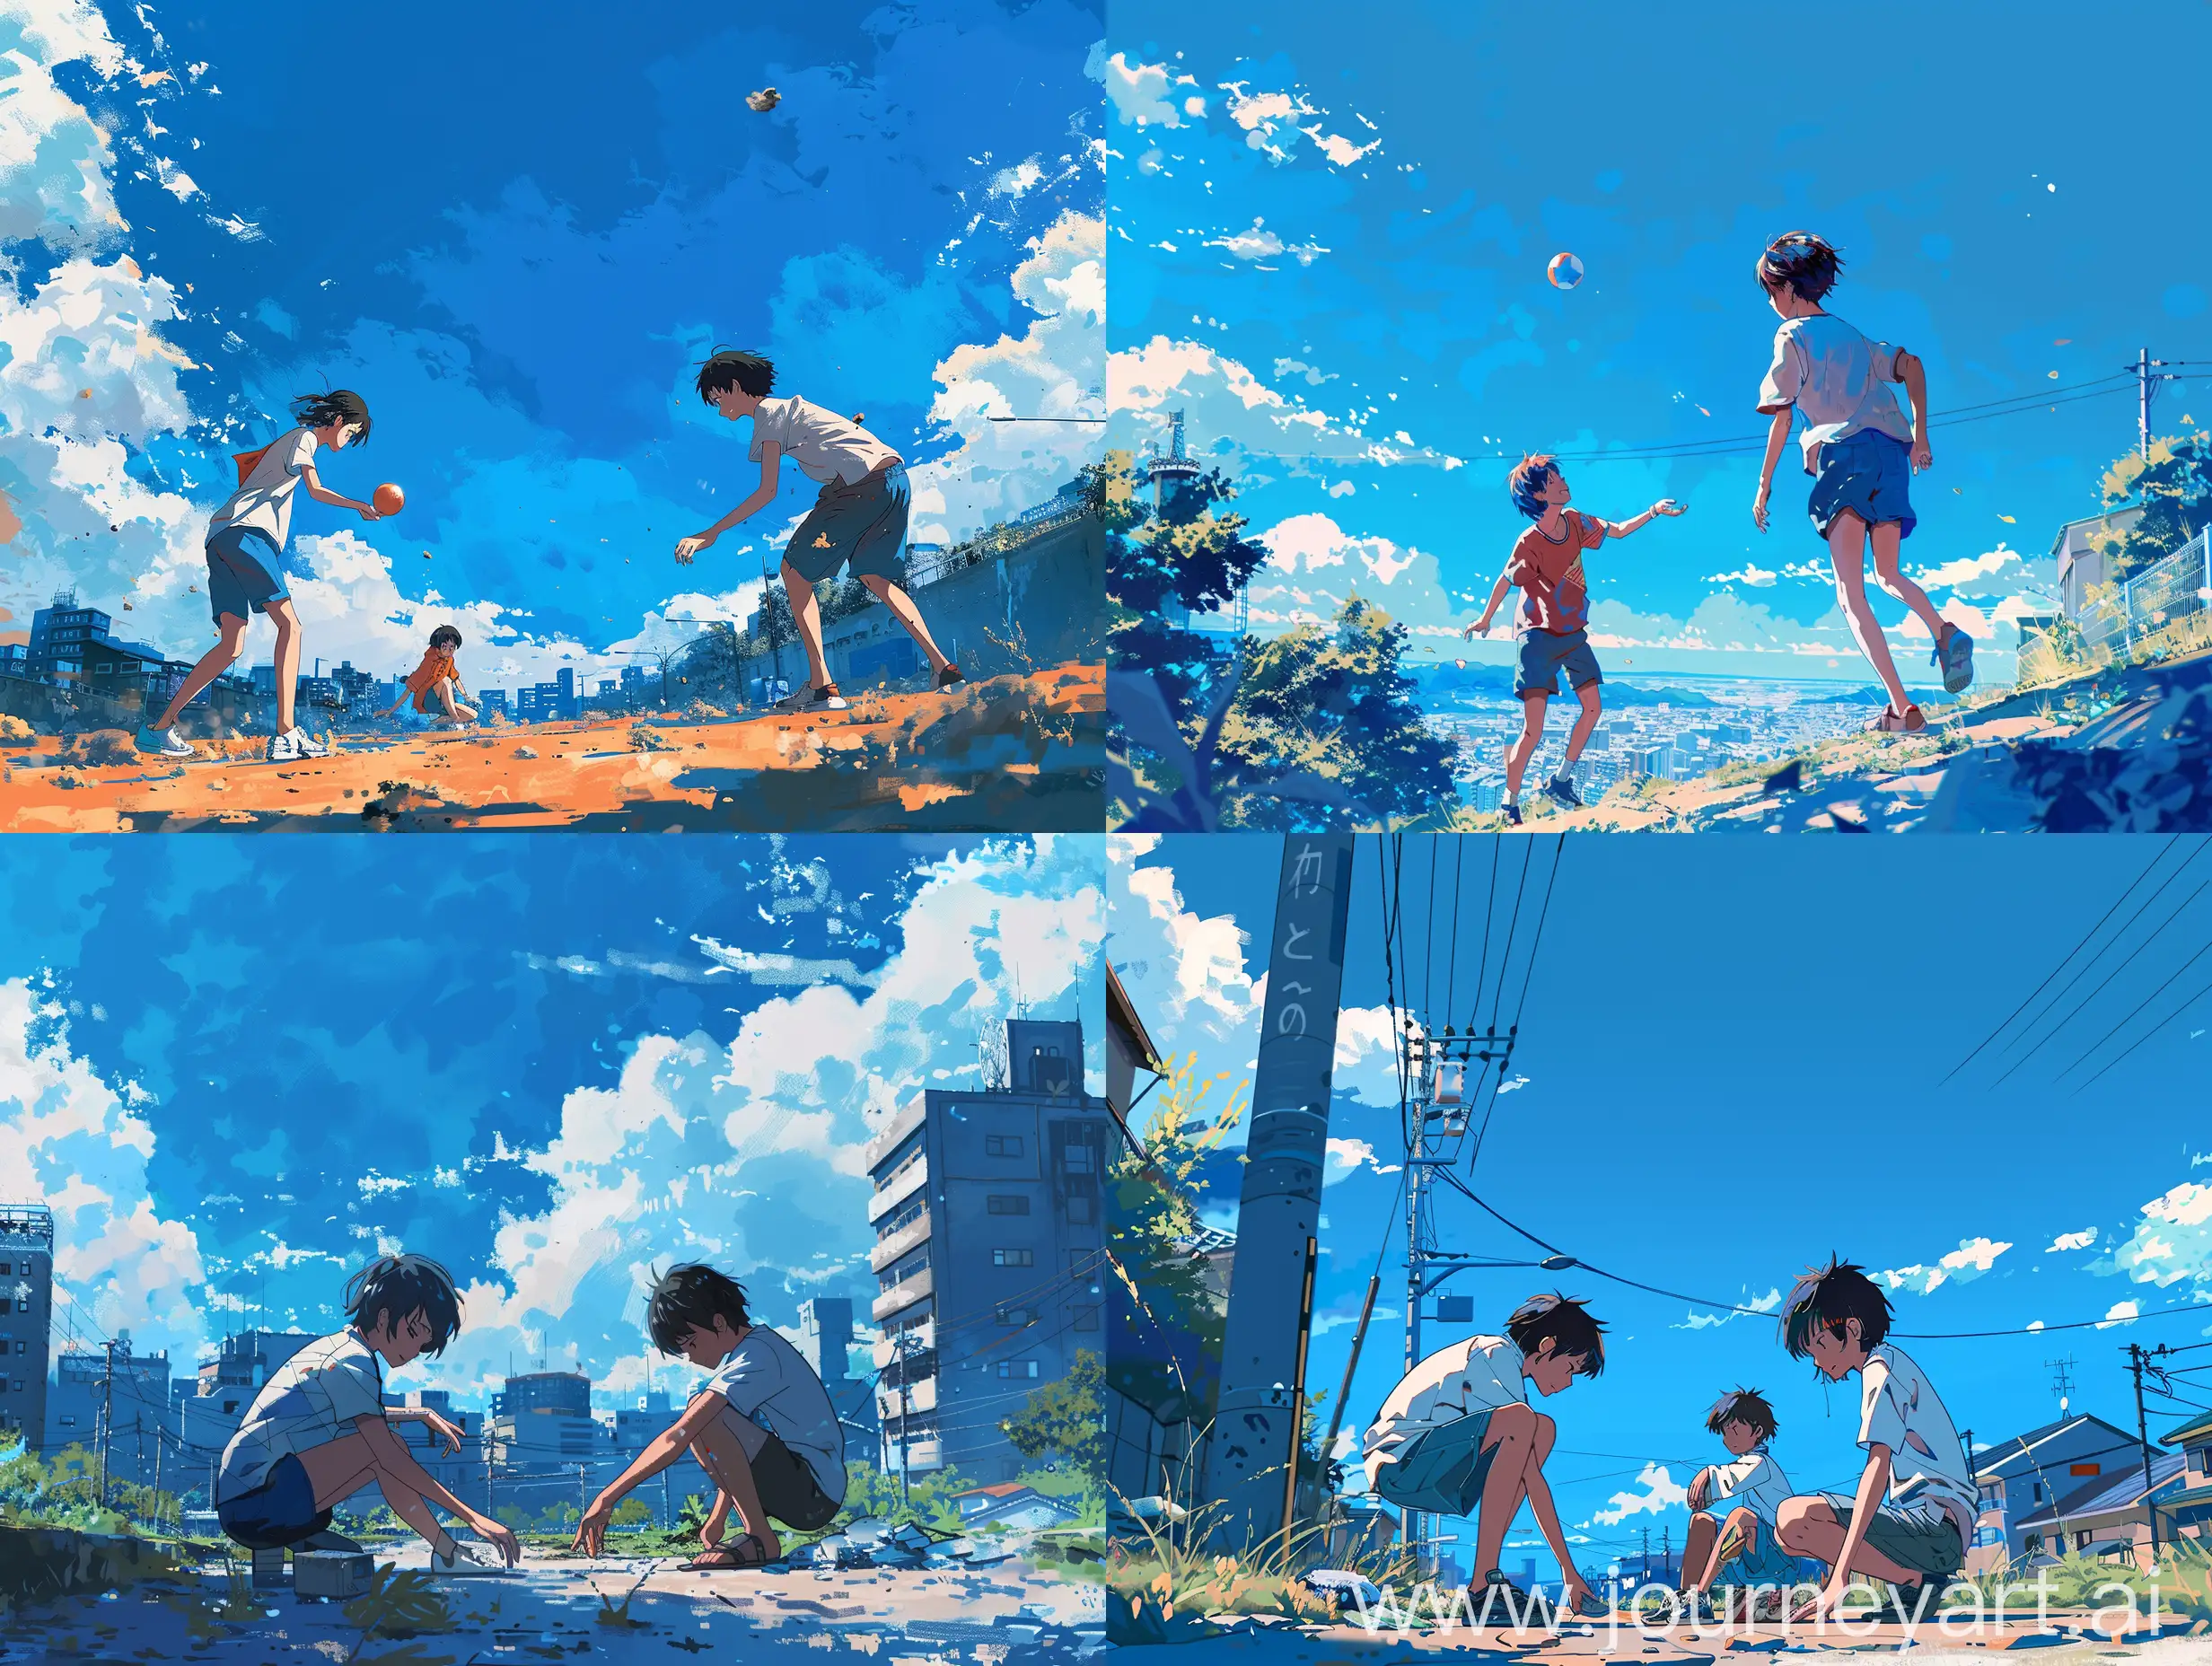 Anime, summer, background city, two teenagers, playing, style of Makoto Shinkai Byousoku 5 Centimeter, blue dead sky, advanced sense of color scheme, national trendy illustration, 8k, rich details,  natural lighting, minimalism